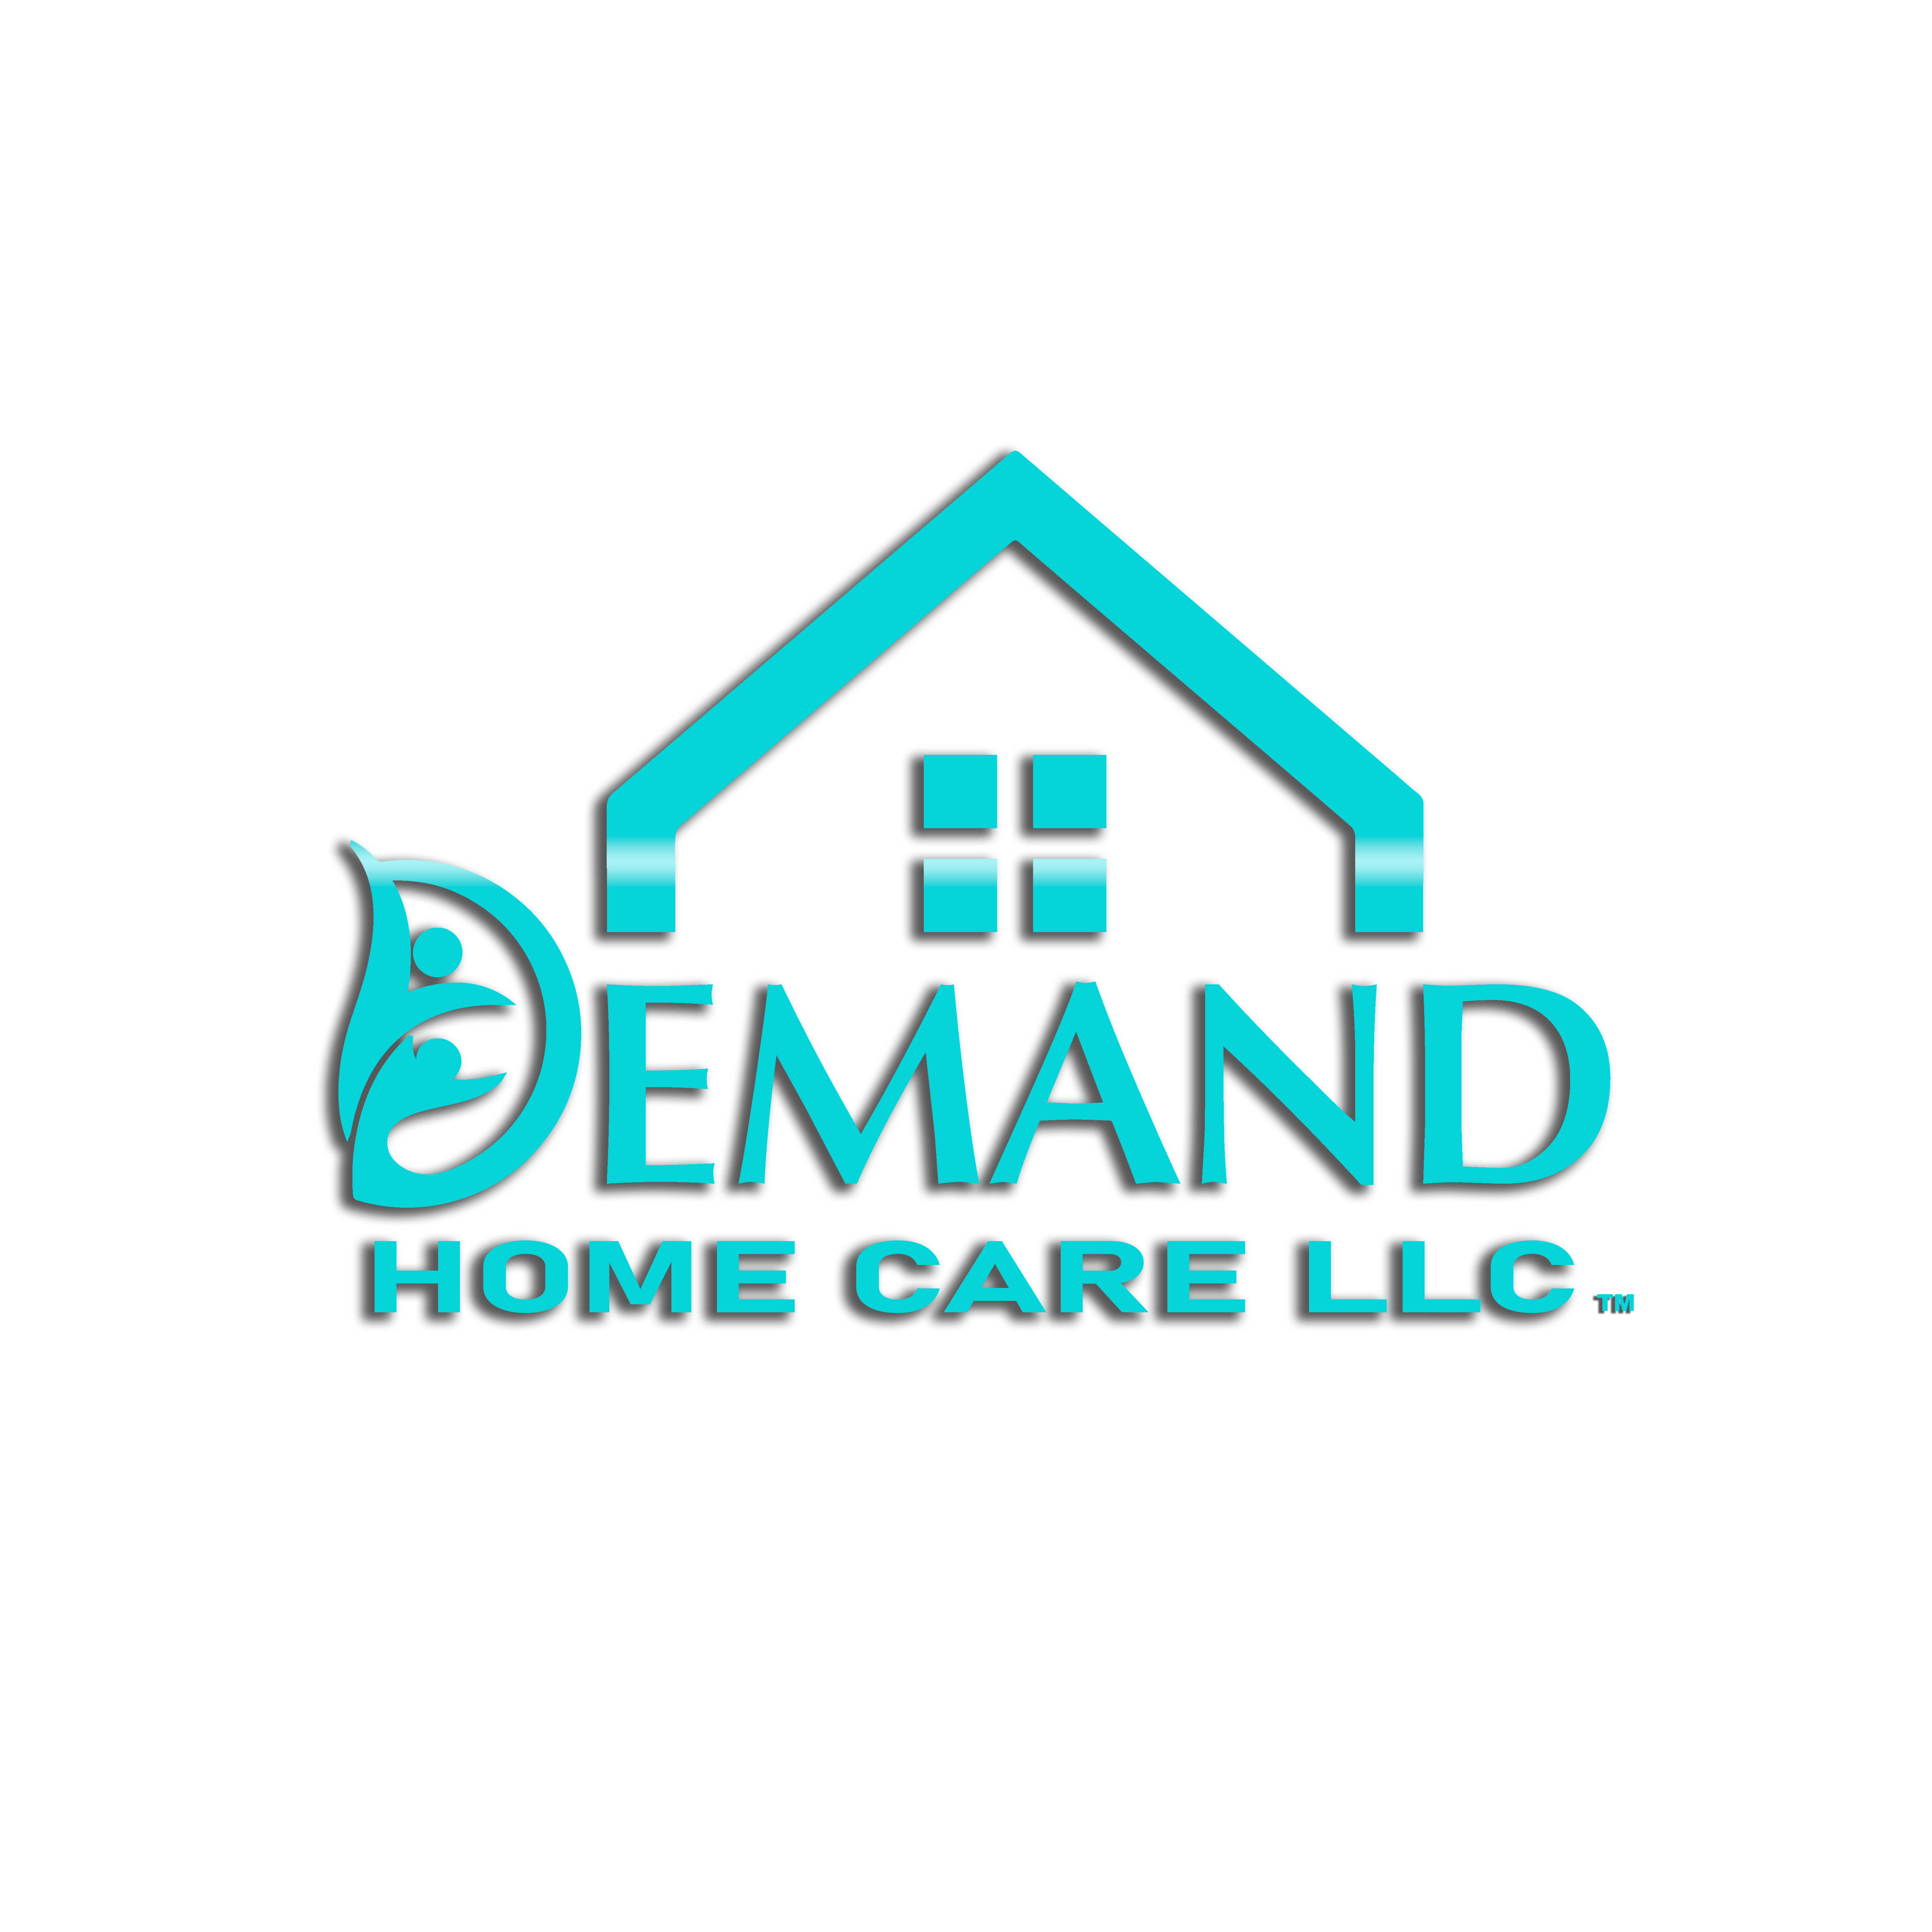 United States 营销公司 Shedless Media 通过 SEO 和数字营销帮助了 Demand Home care 发展业务